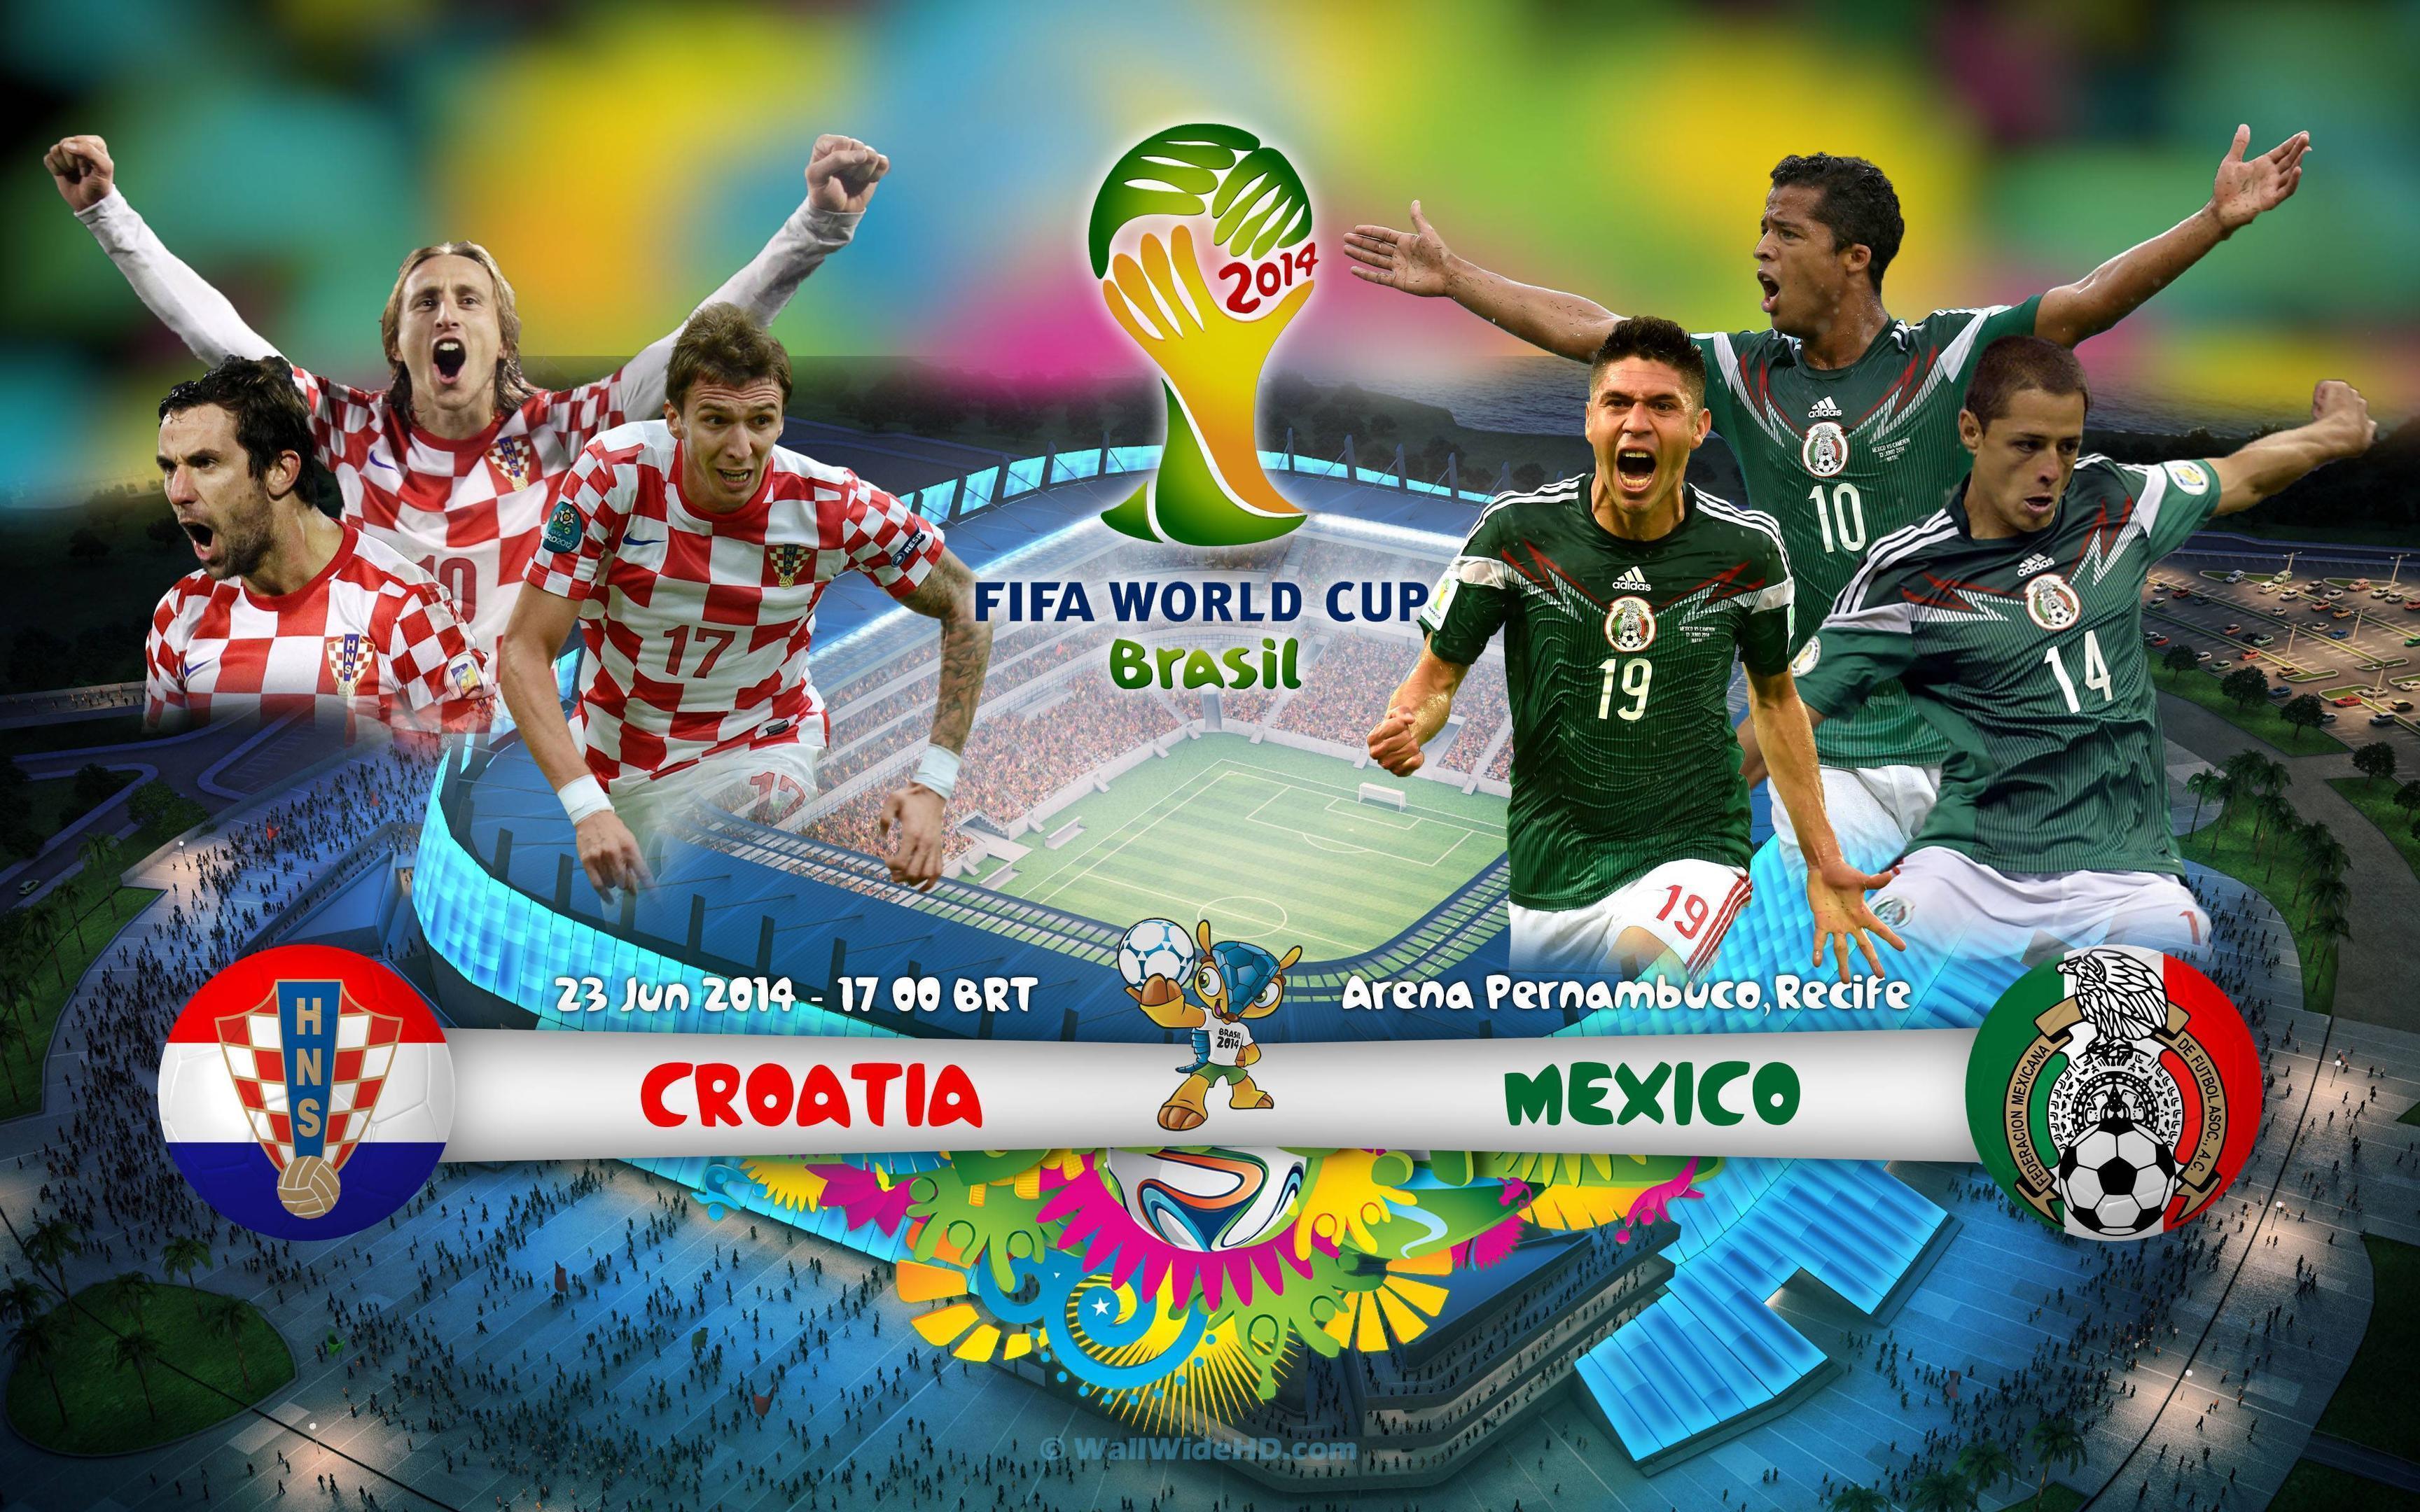 Croatia vs Mexico 2014 World Cup Group A Football Match Wallpaper